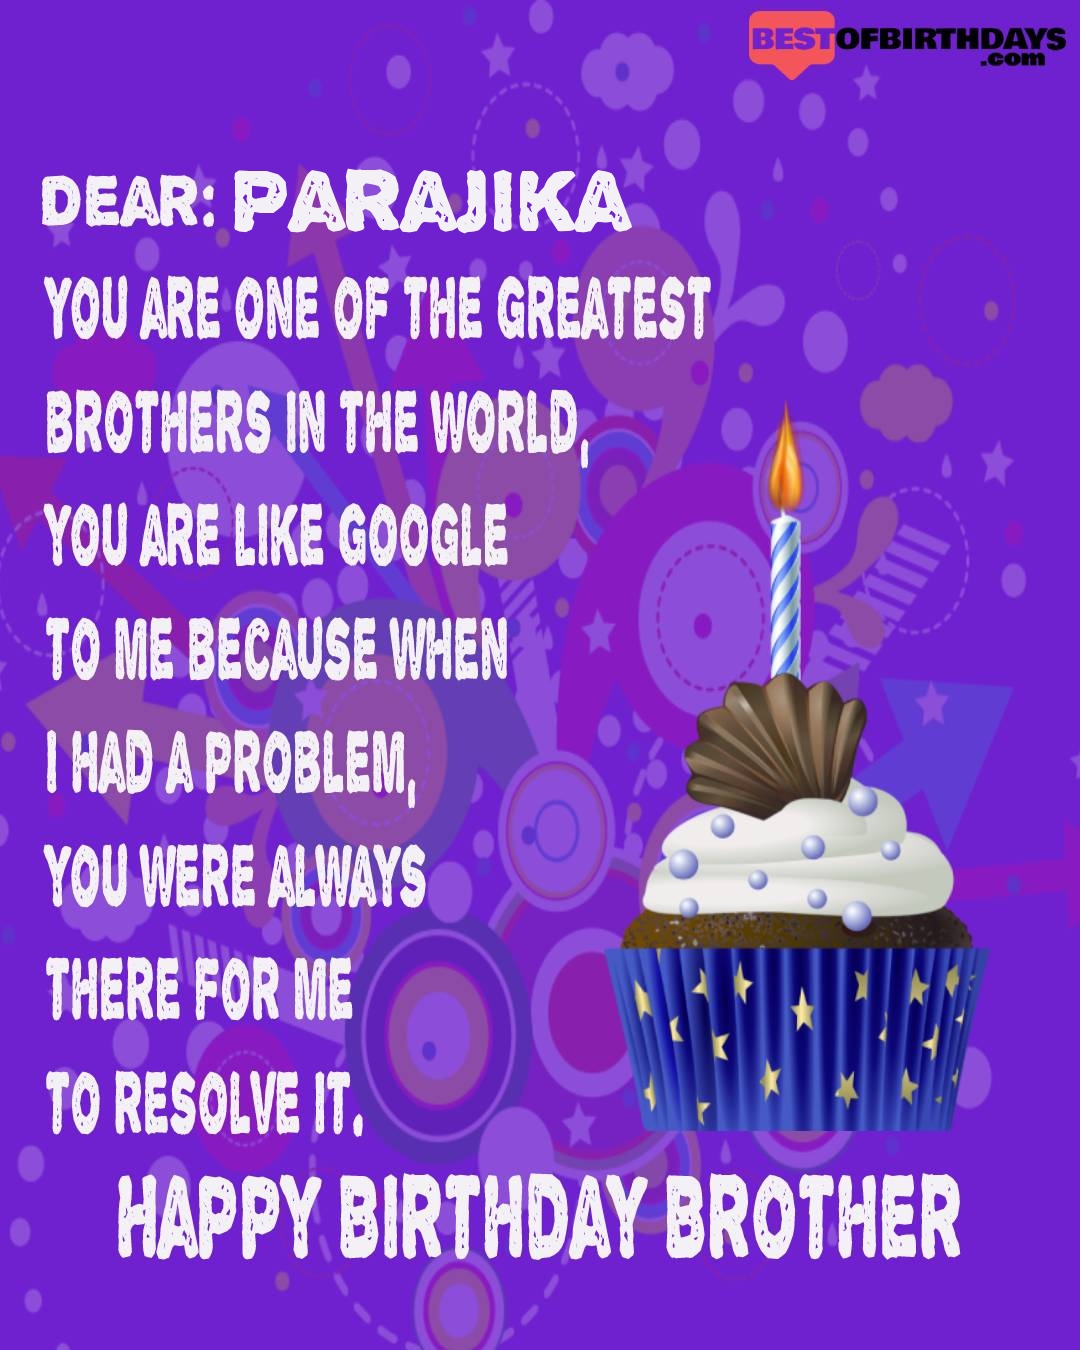 Happy birthday parajika bhai brother bro